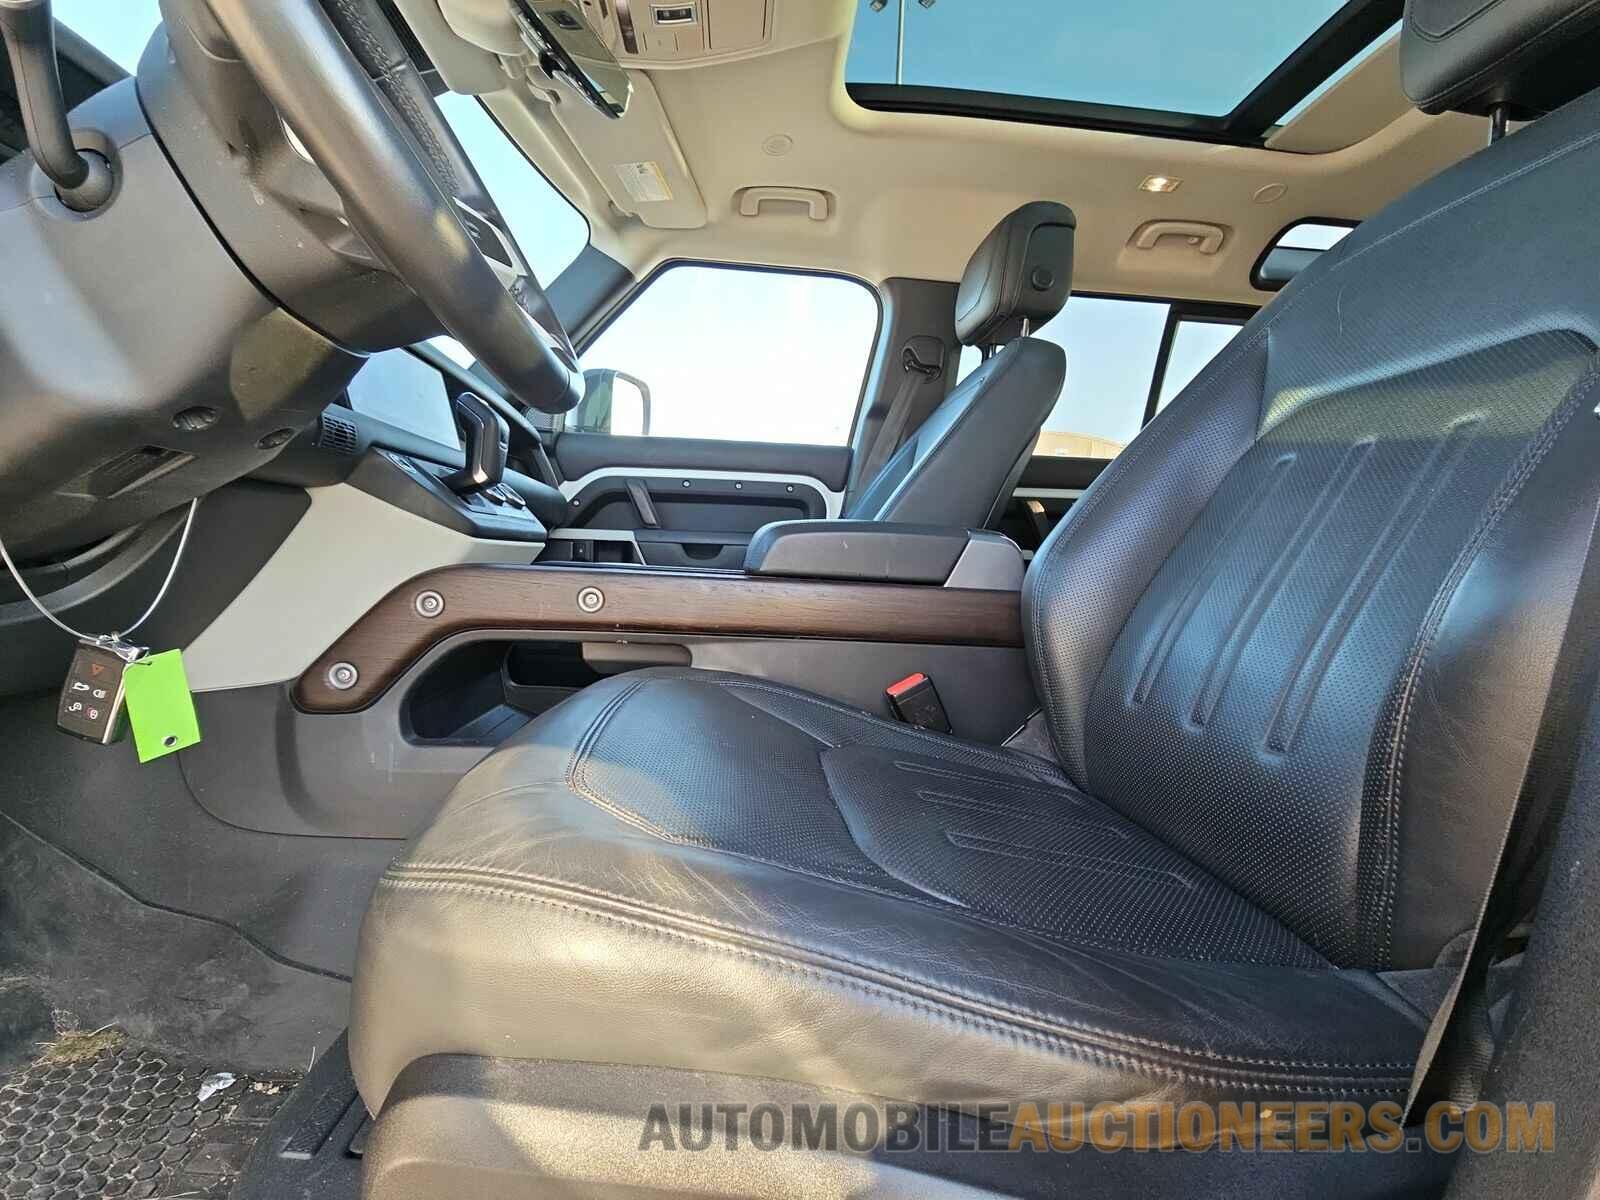 SALE9EEU6L2017603 Land Rover Defender 2020